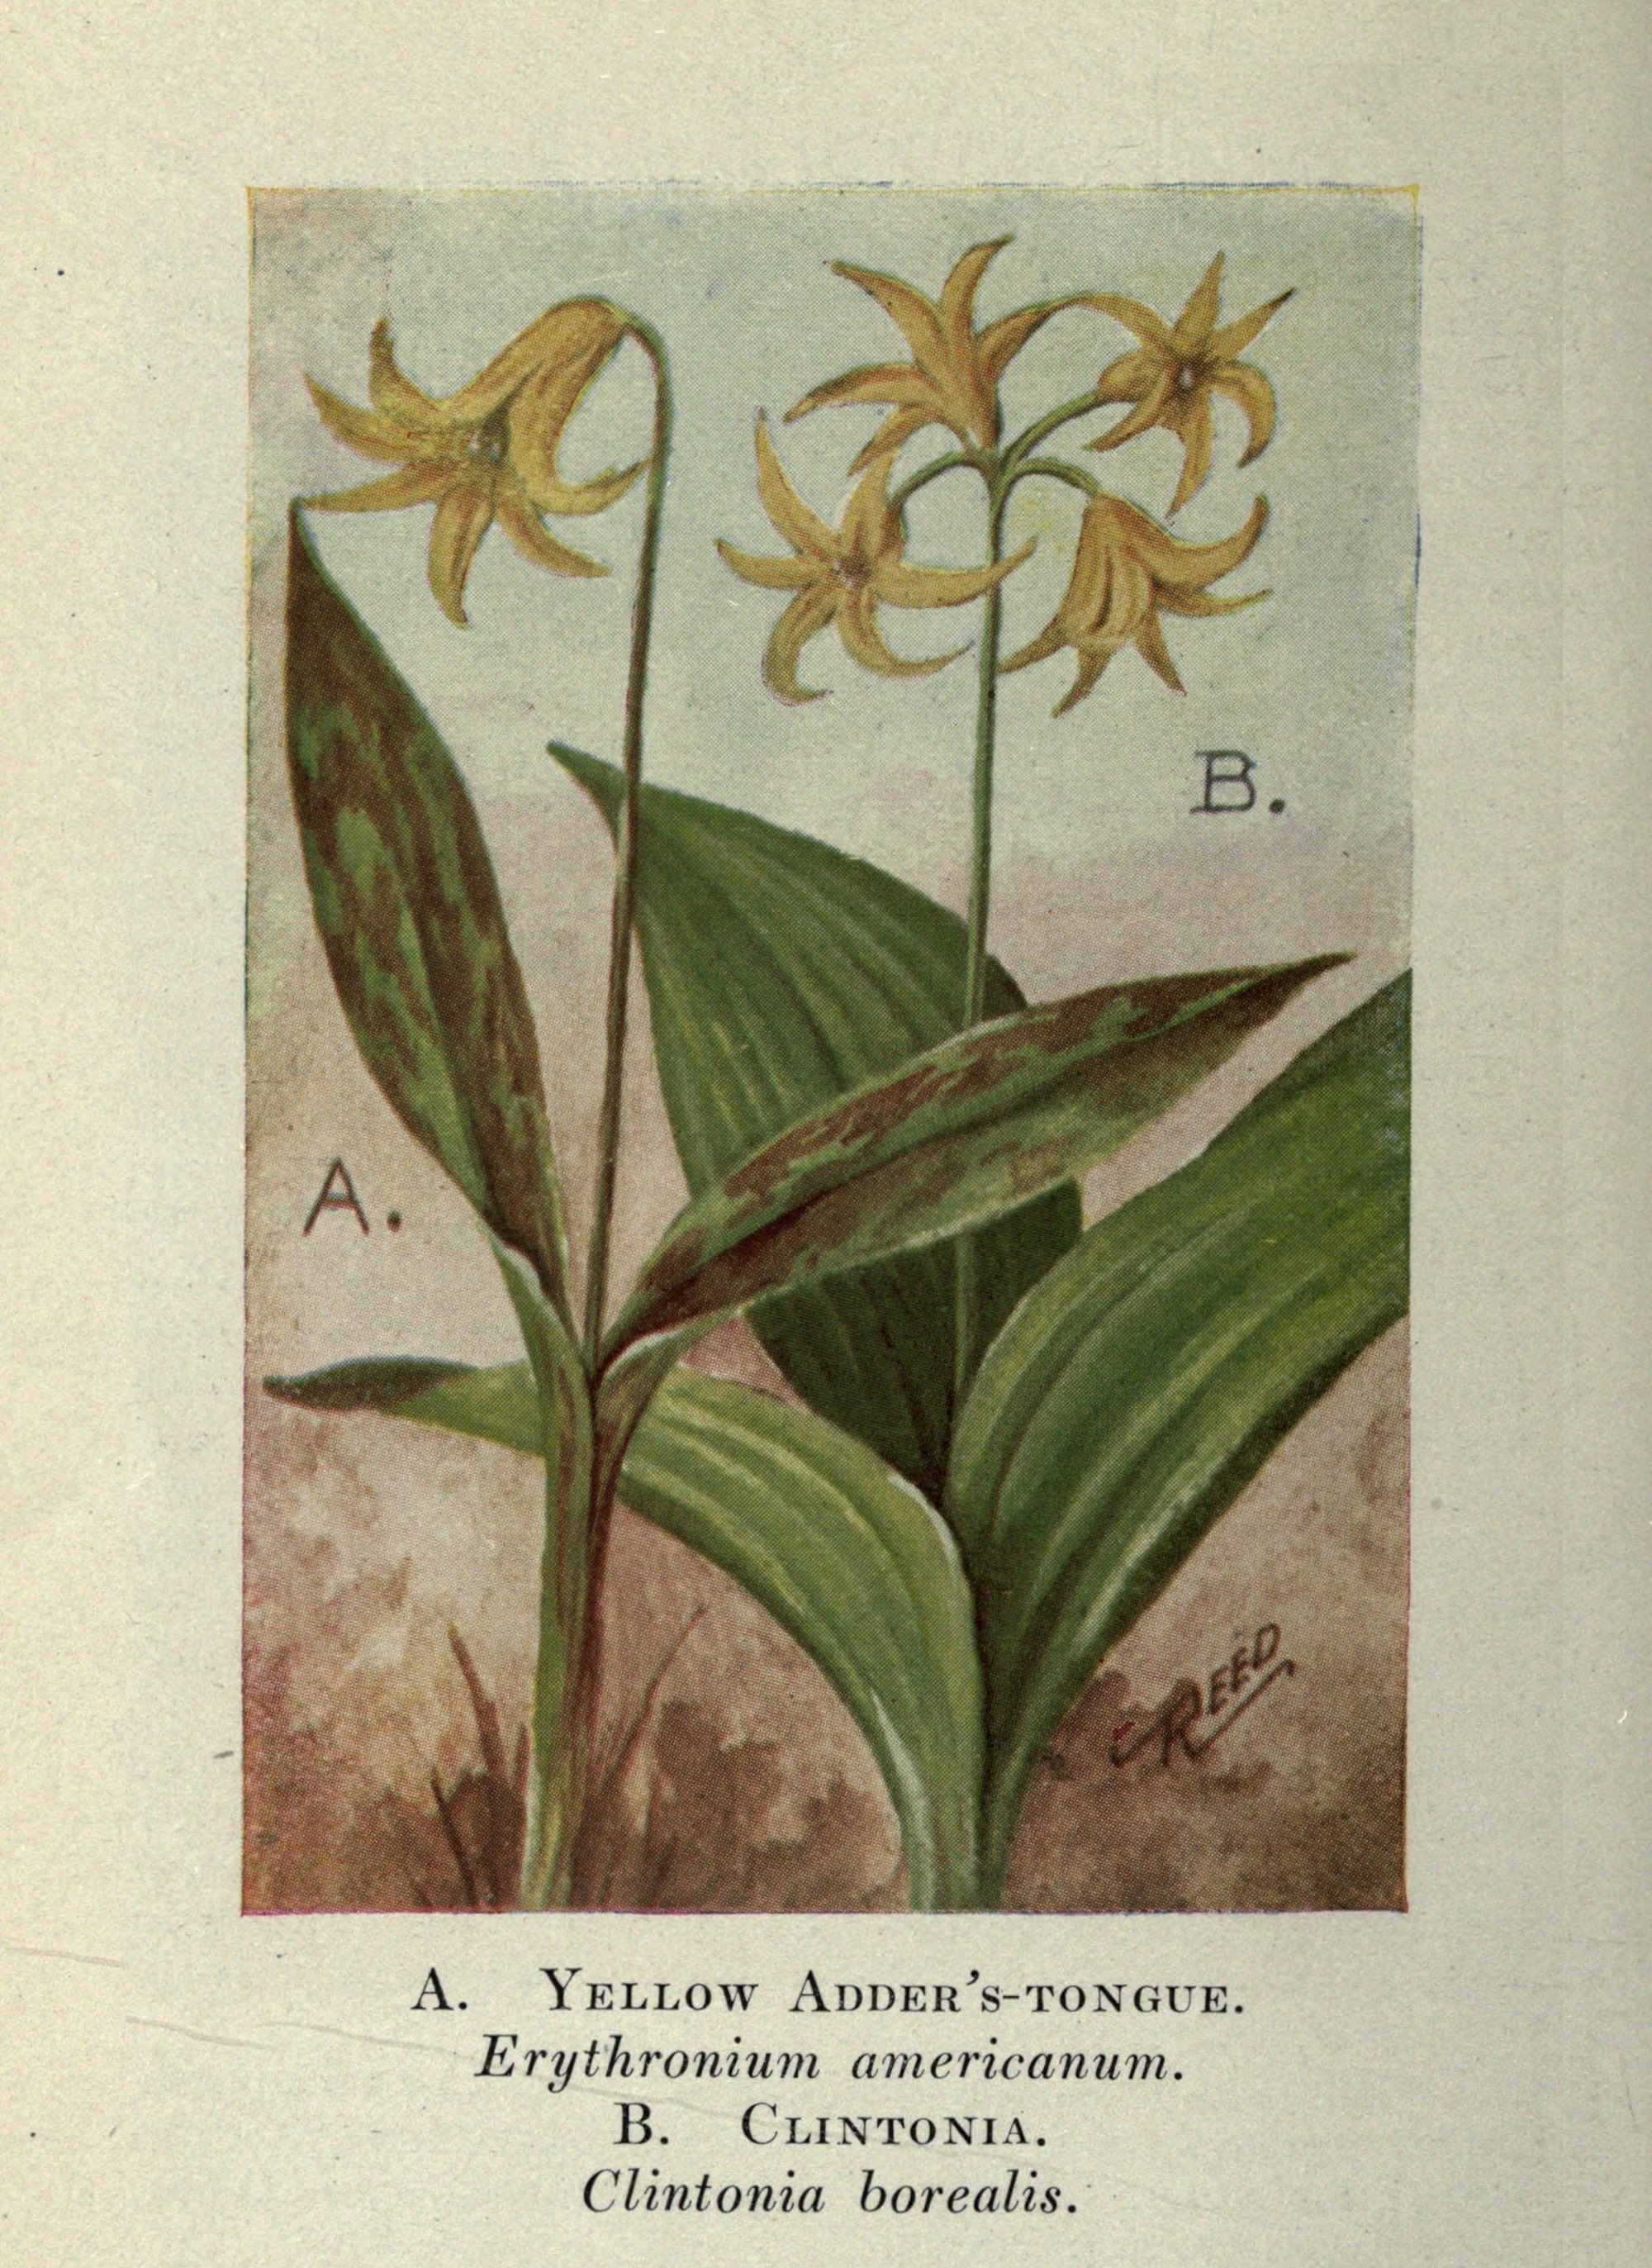 1910 Trout Lily Erythronium americanum Trout Lily botanical illustration.